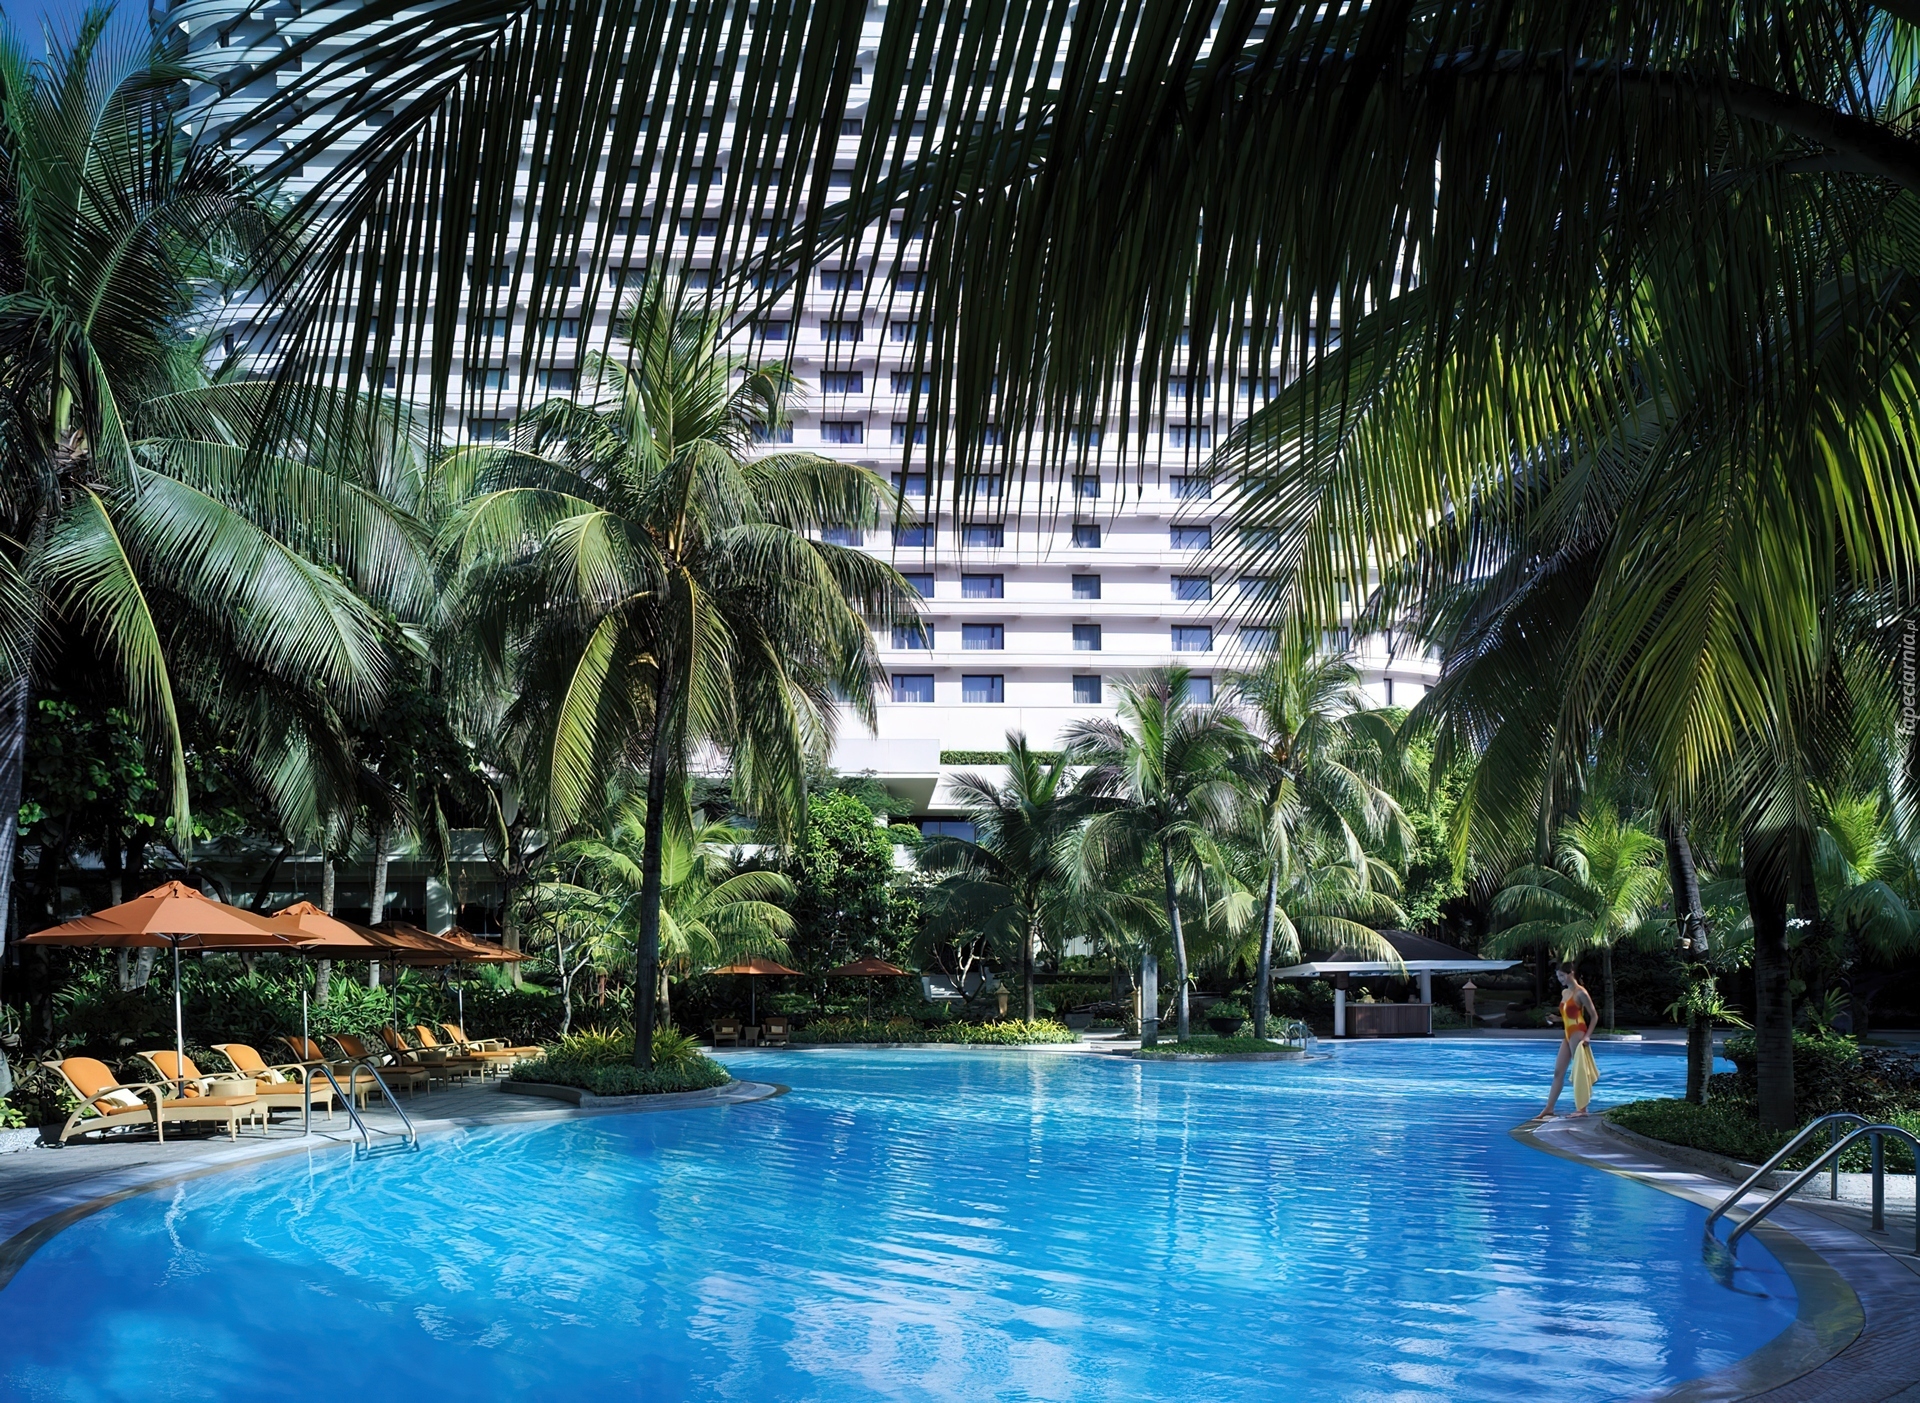 Hotel, Basen, Palmy, Bangkok, Tajlandia